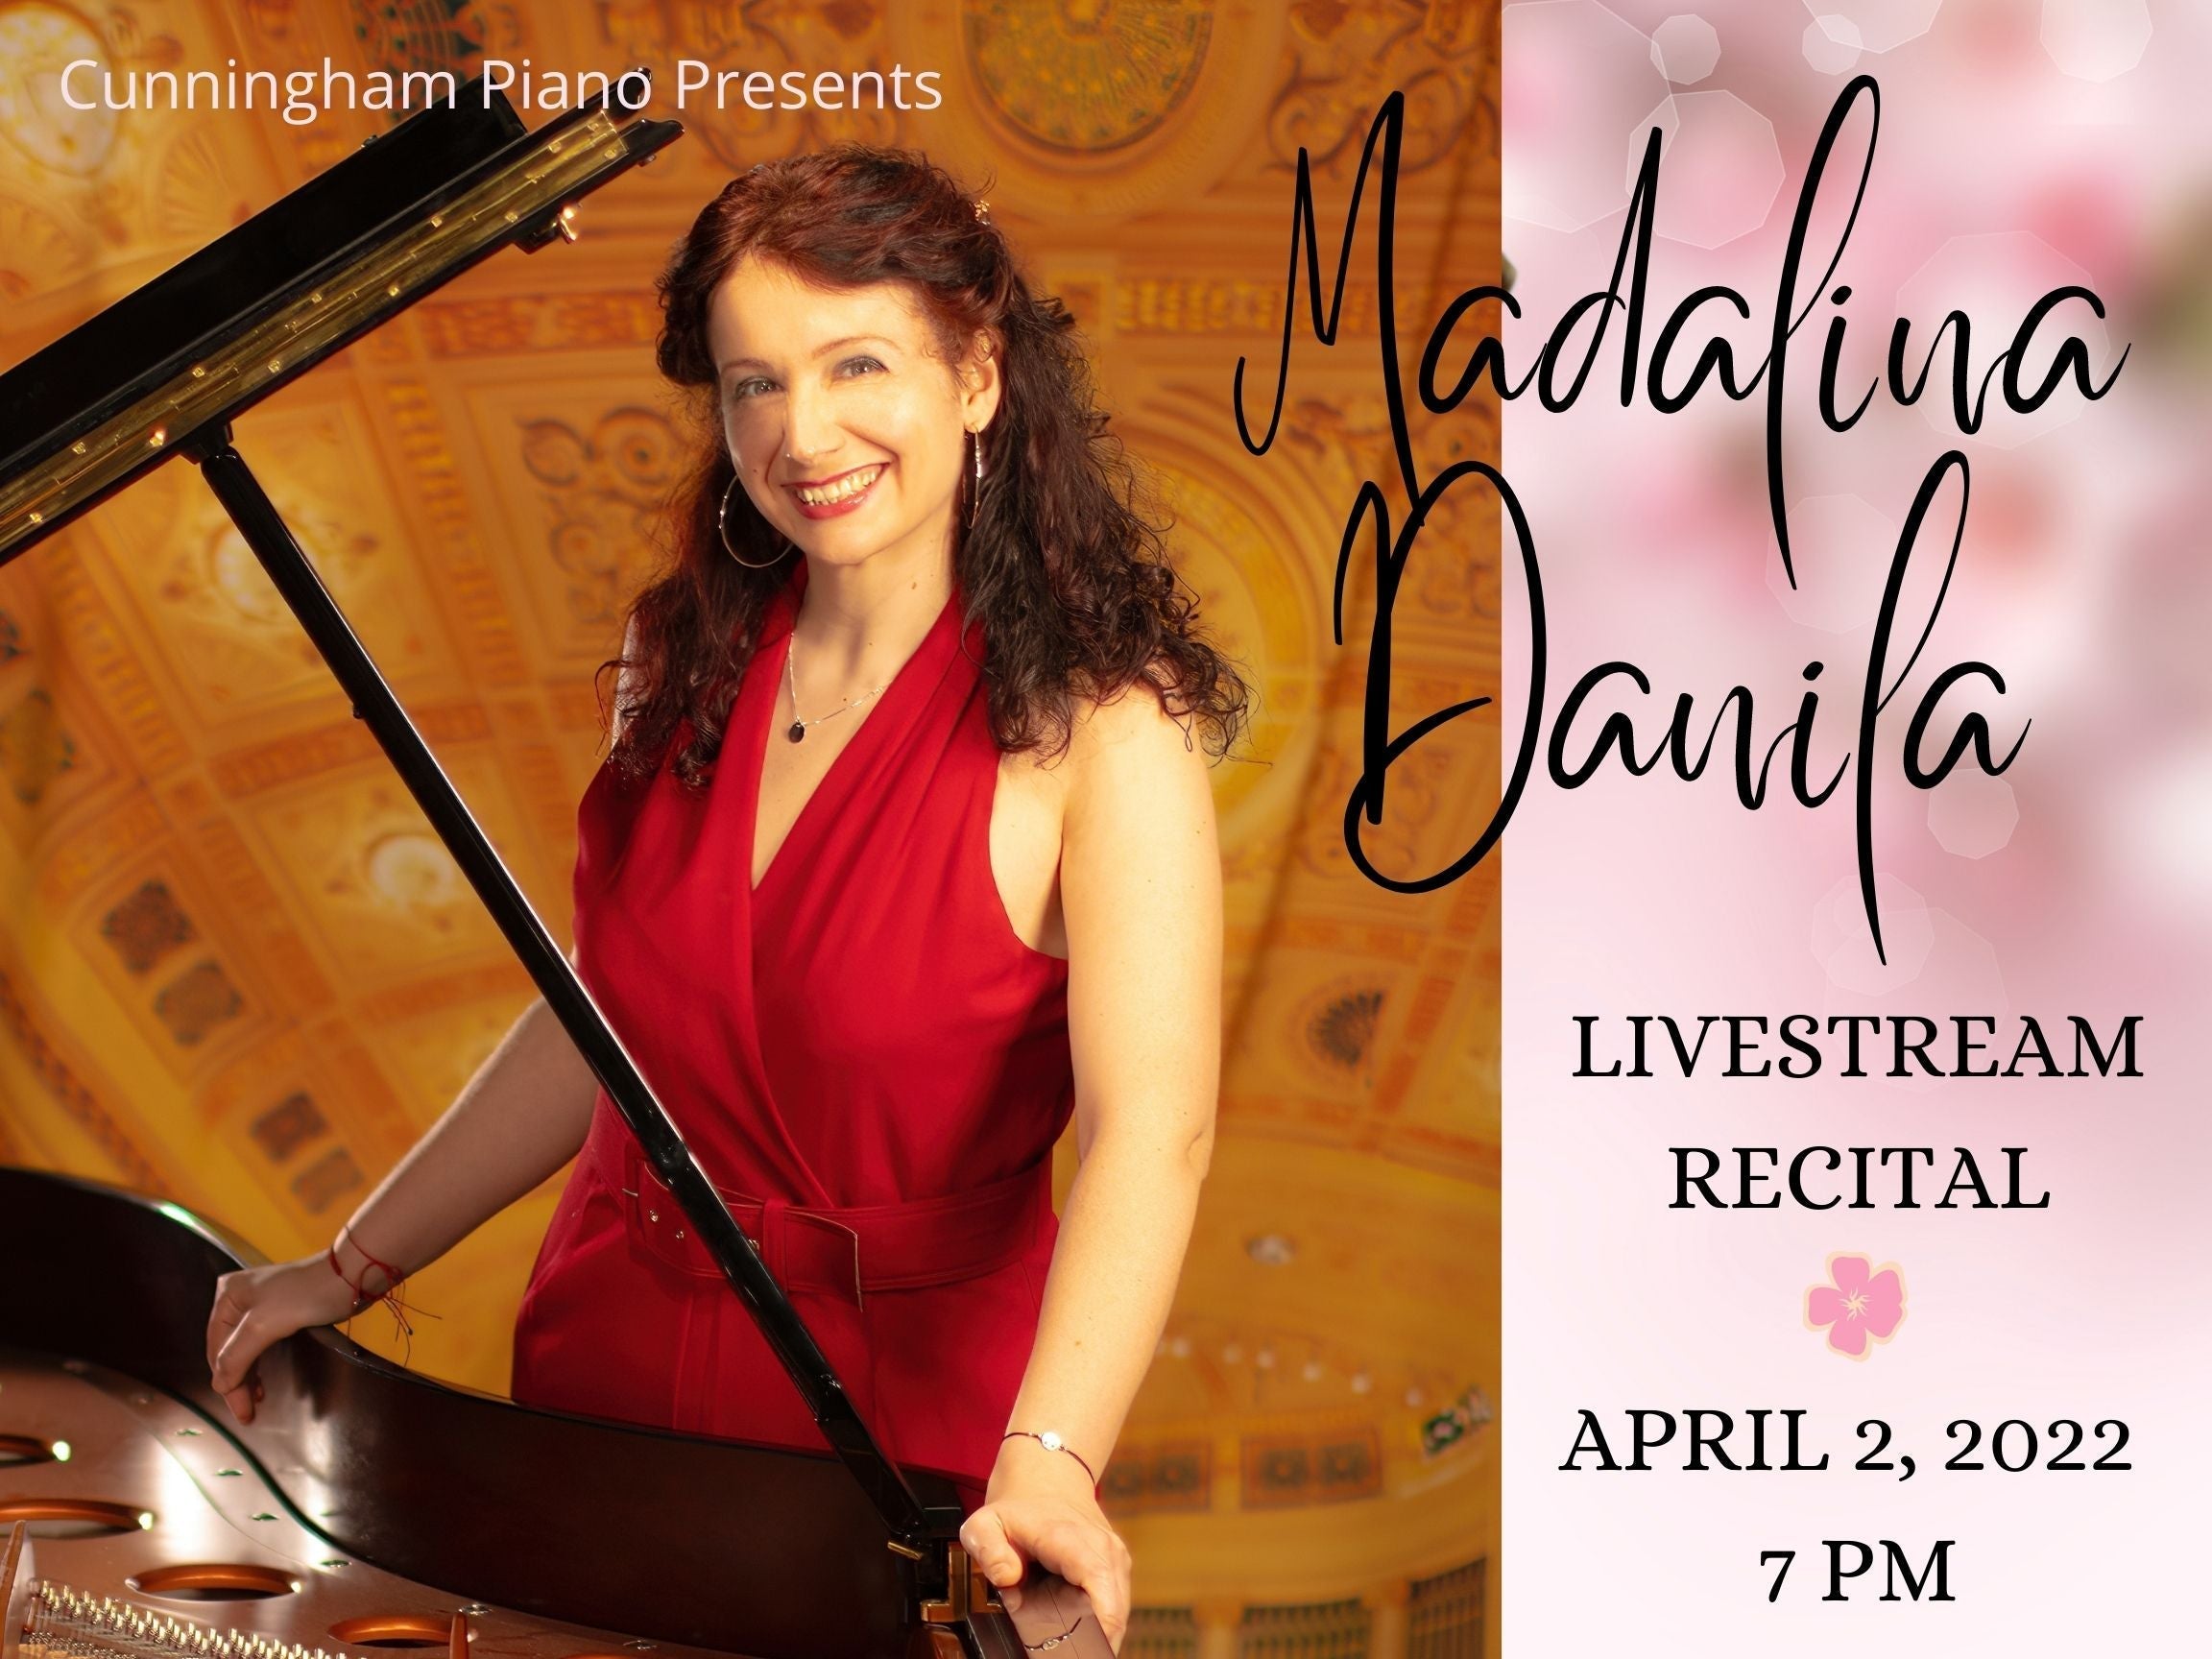 Romanian Pianist Madalina Danila in Recital at Cunningham Piano